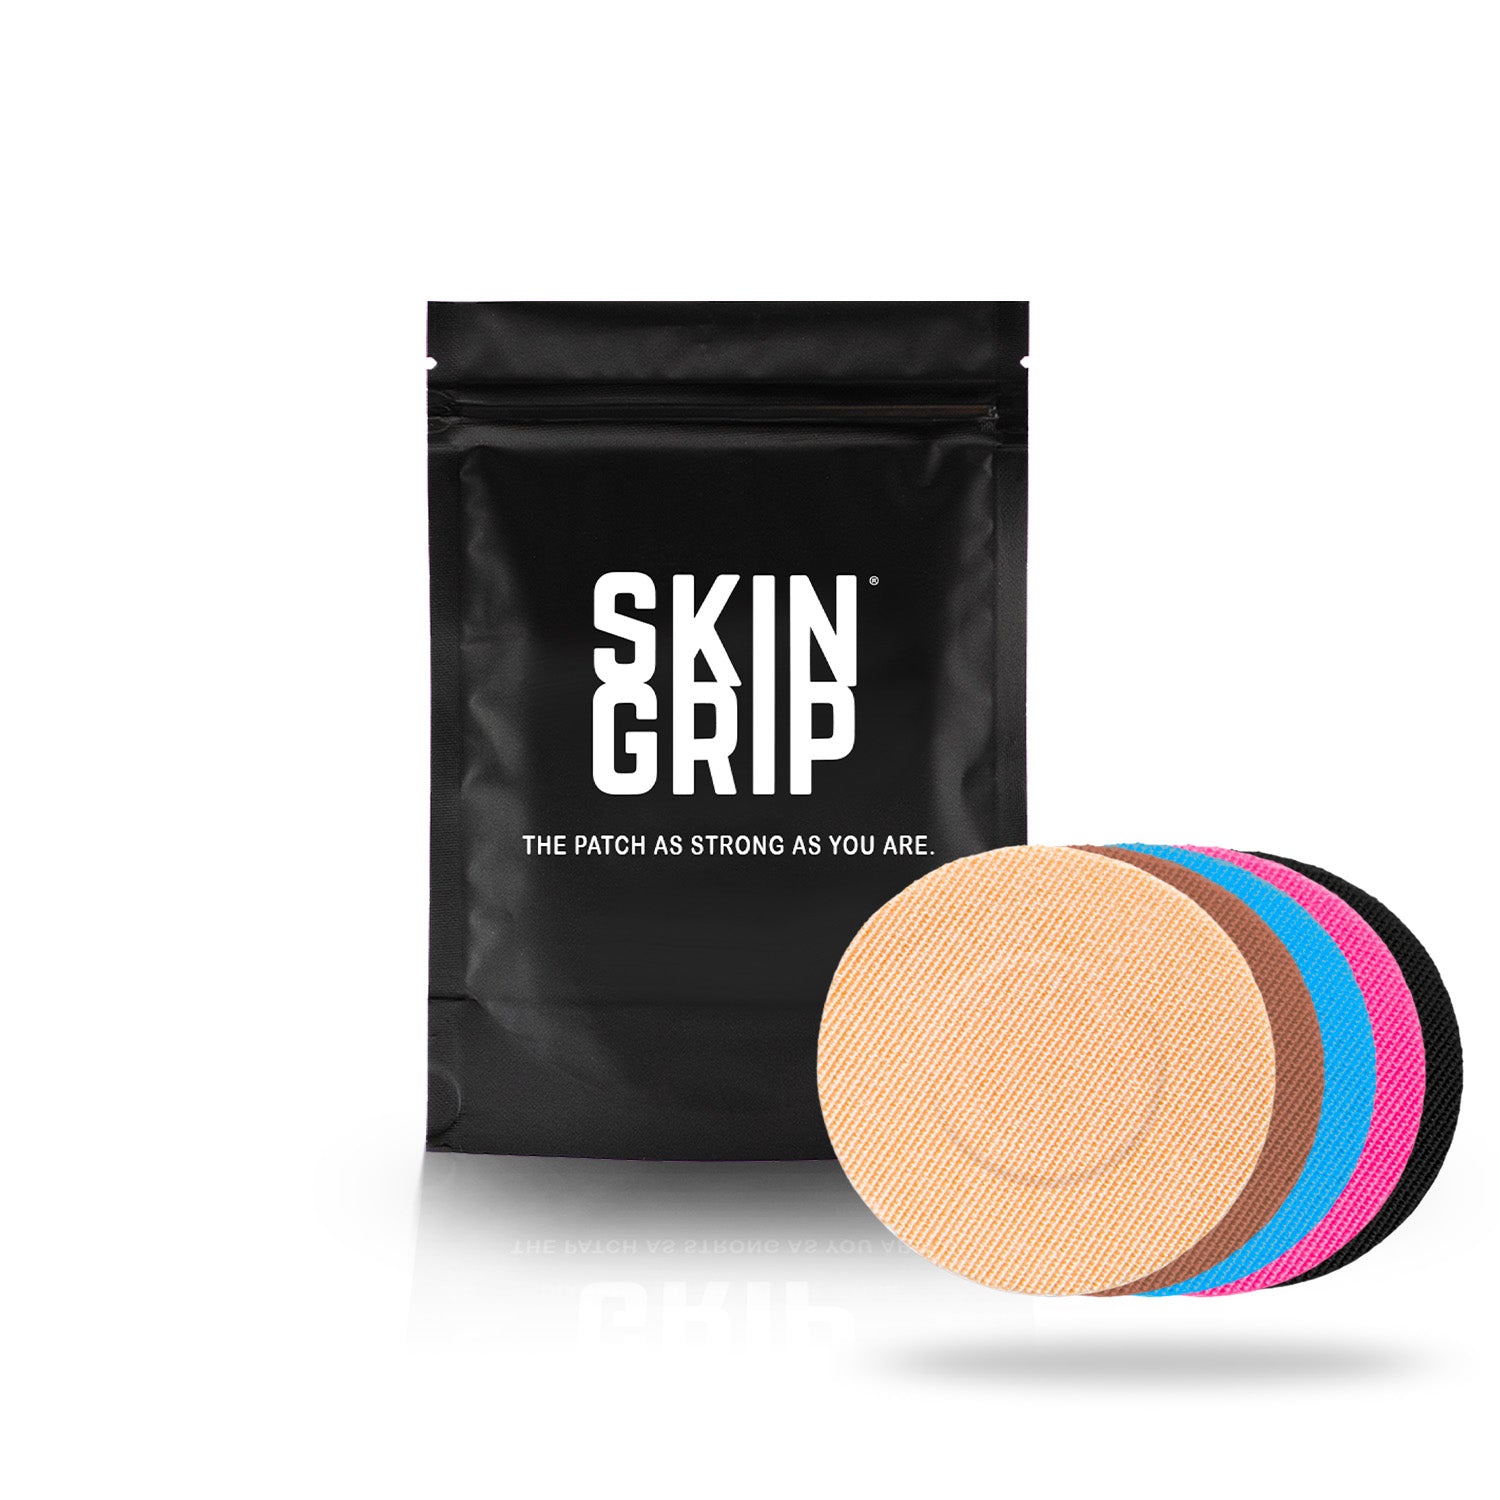 Skin Tac™ Wipe – Sugar Medical